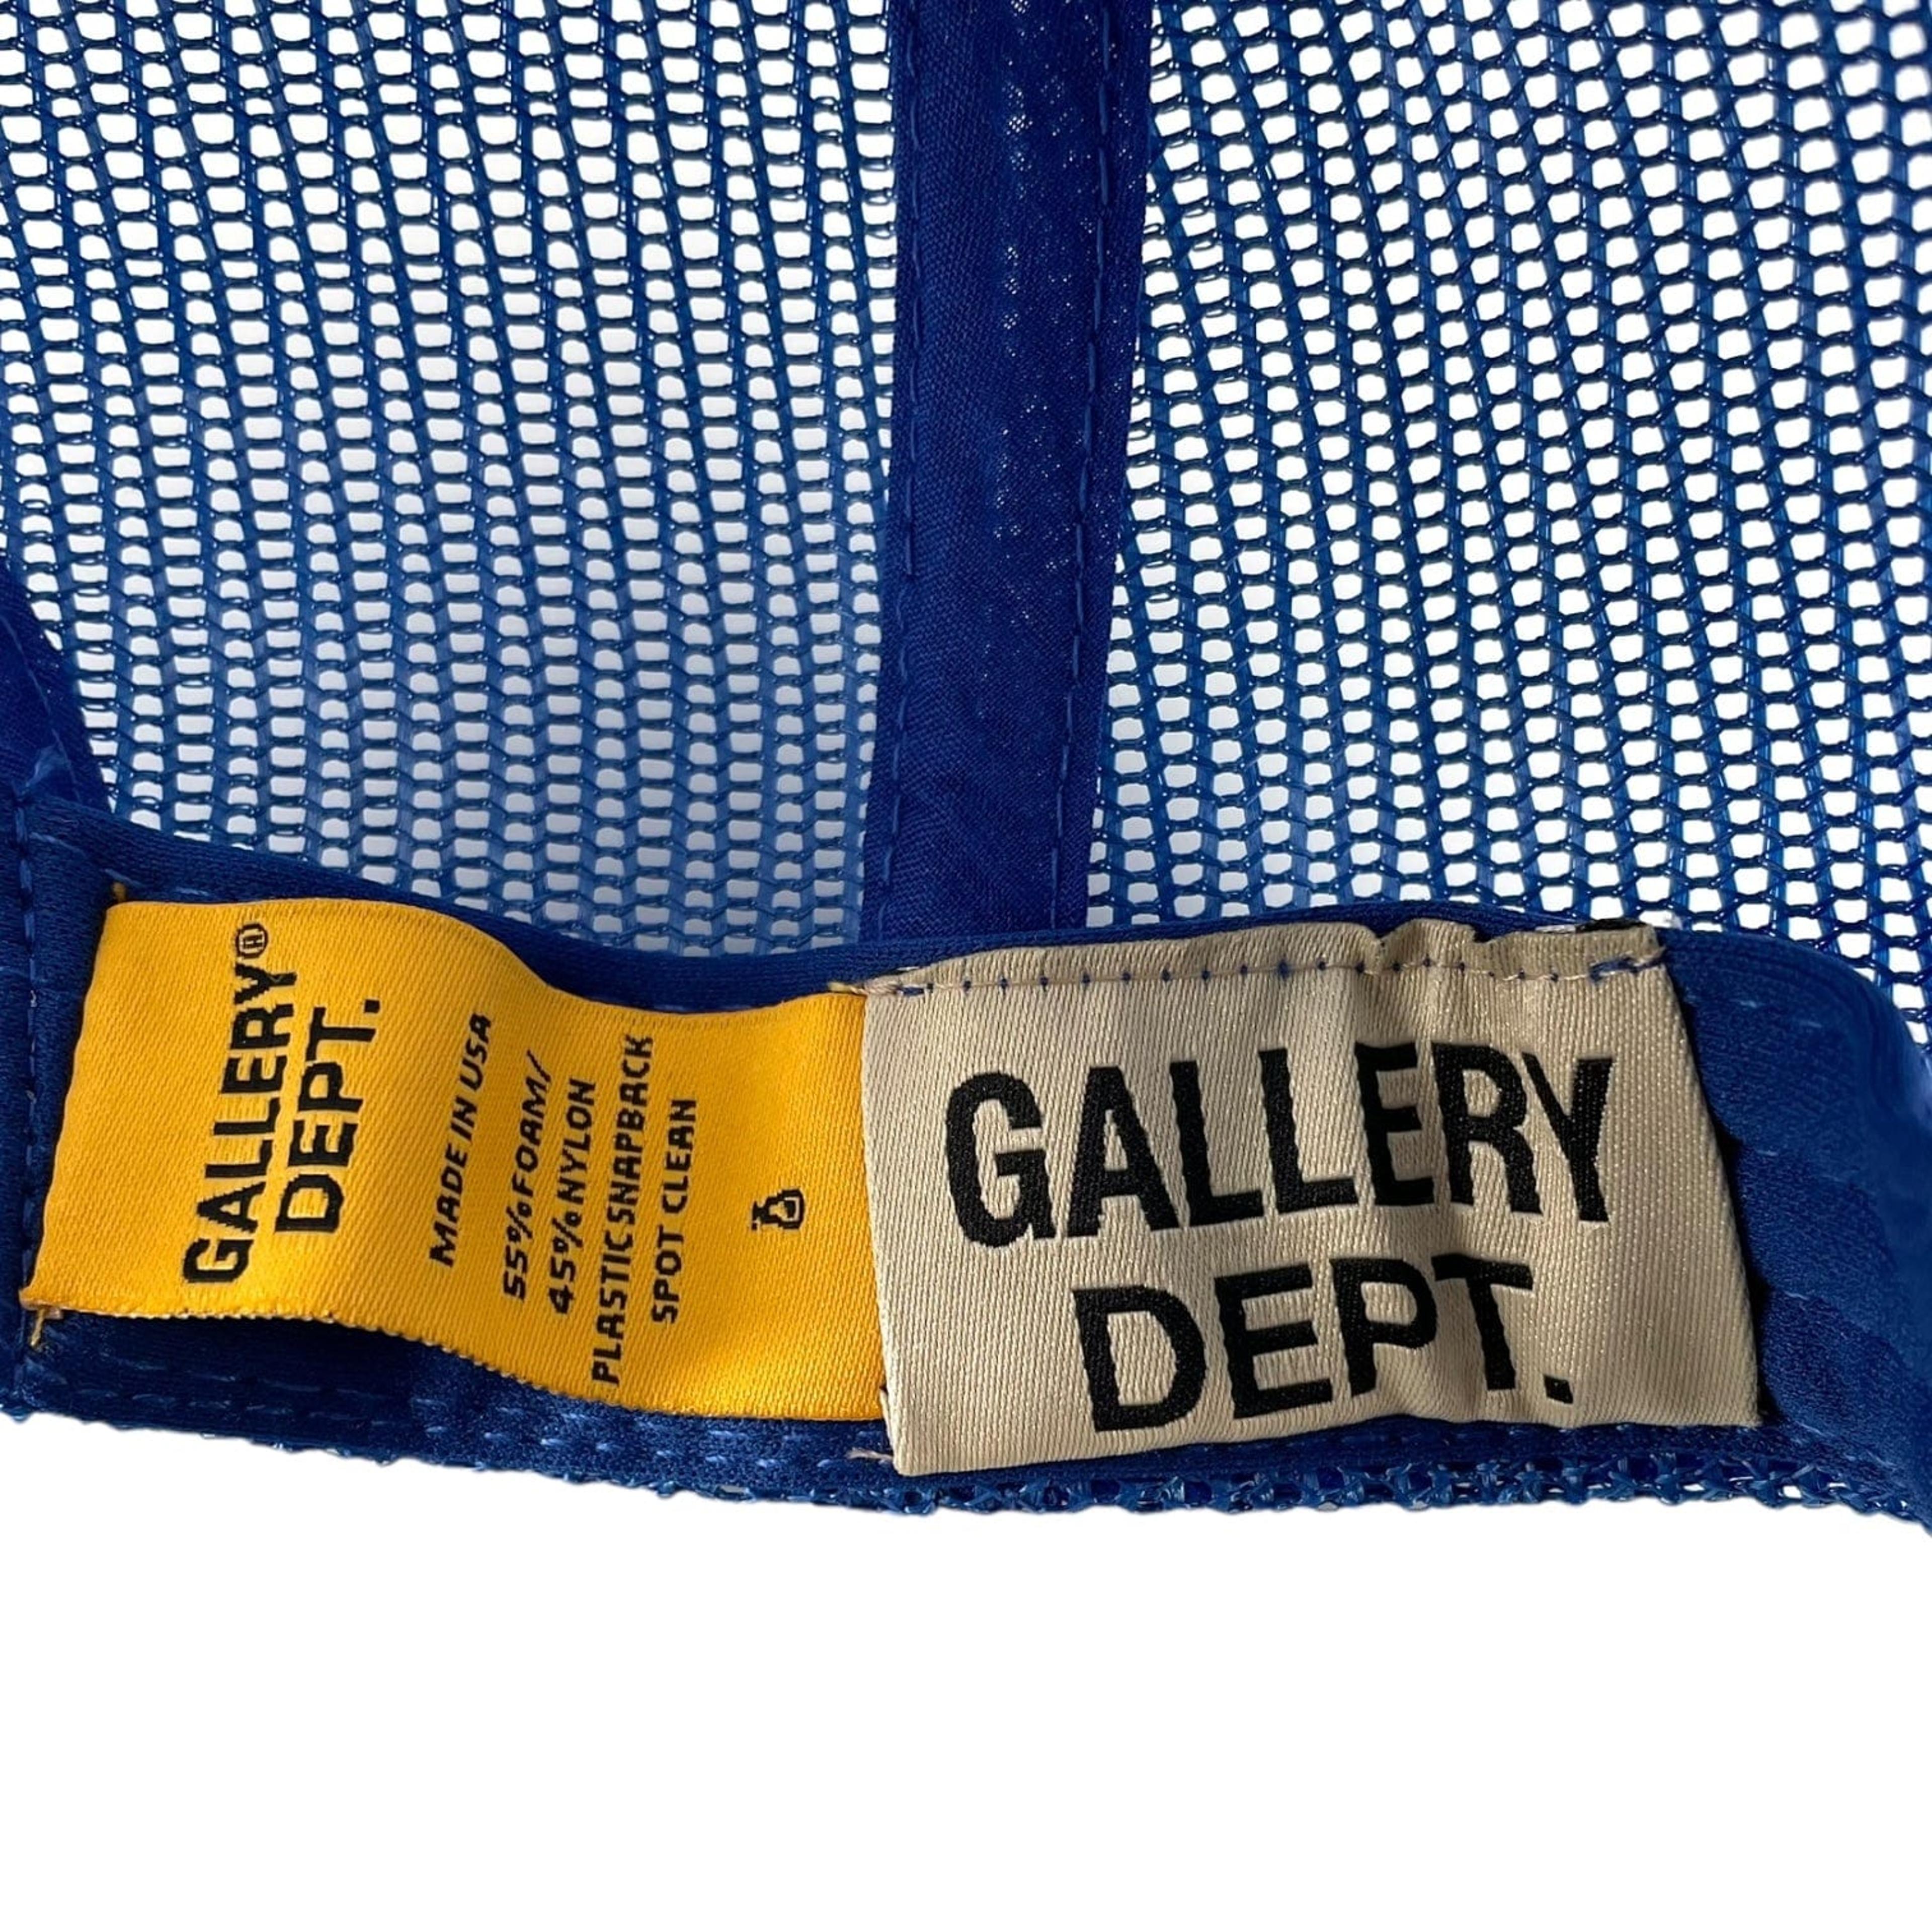 Alternate View 6 of Gallery Department Logo Trucker Hat Blue Yellow